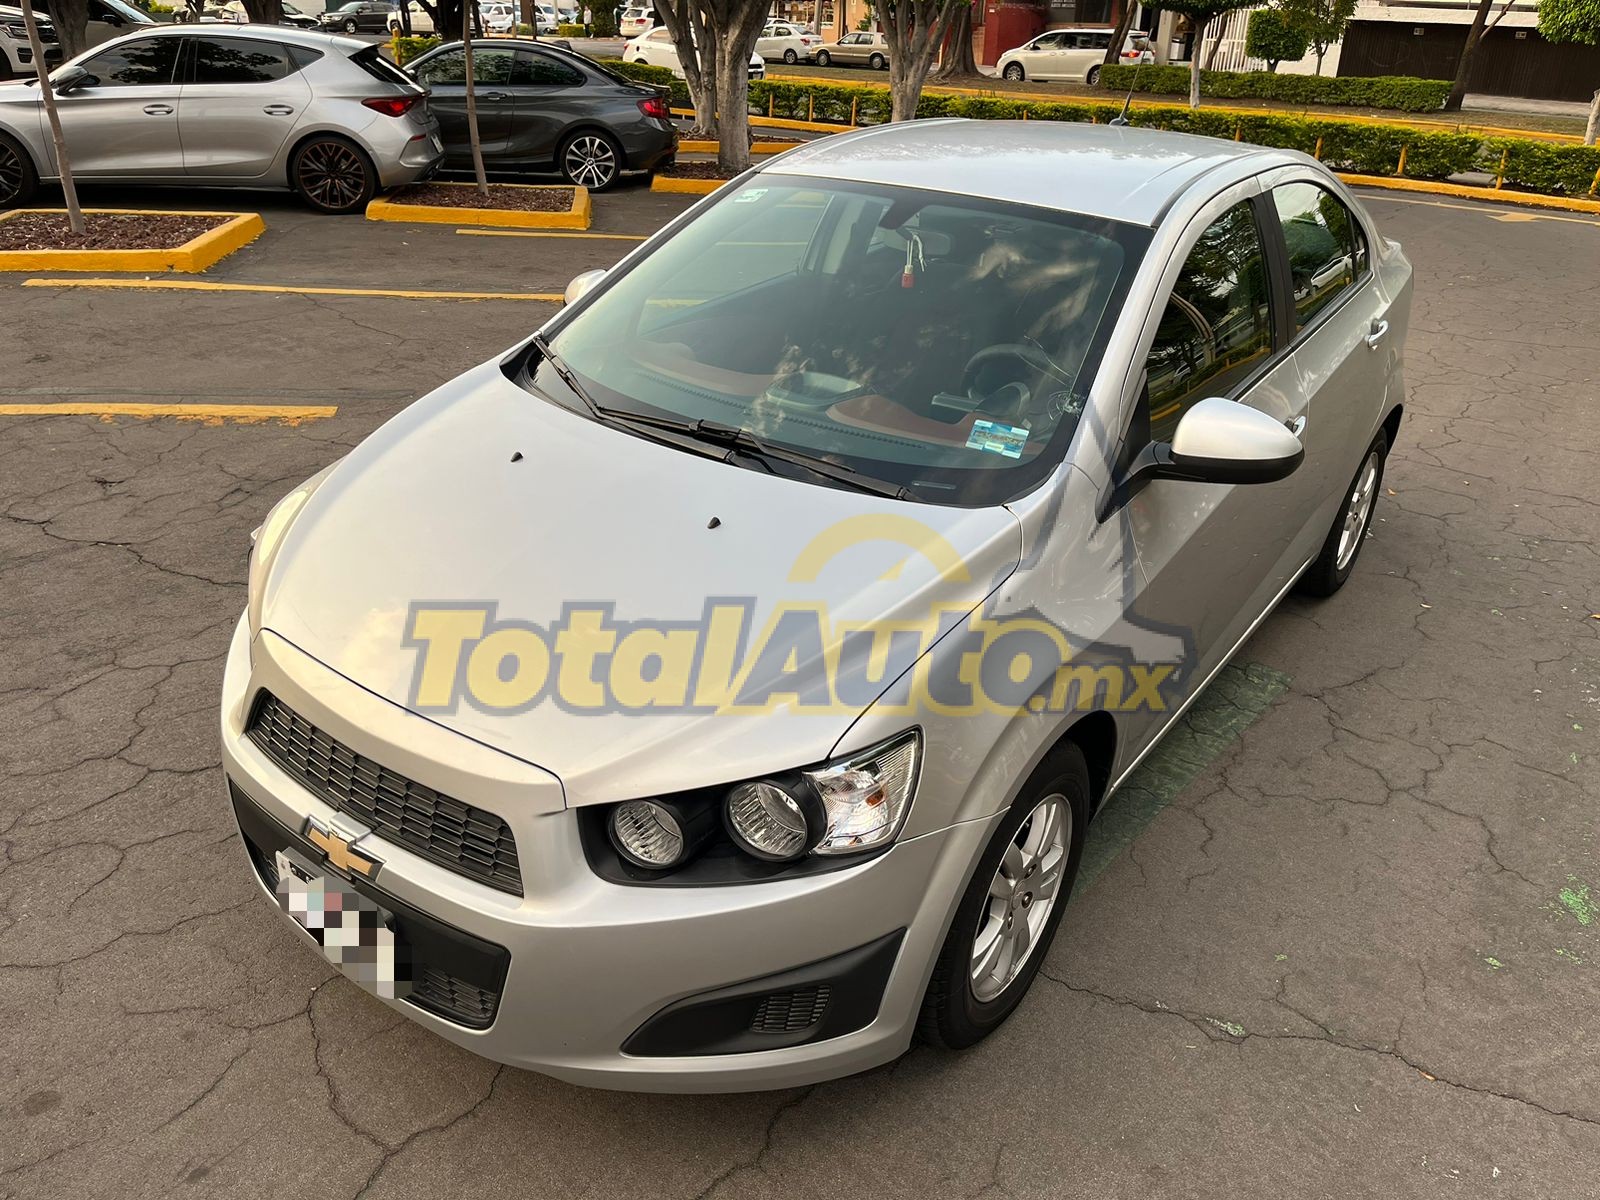 Chevrolet Sonic LT 2016 total auto mx (10)